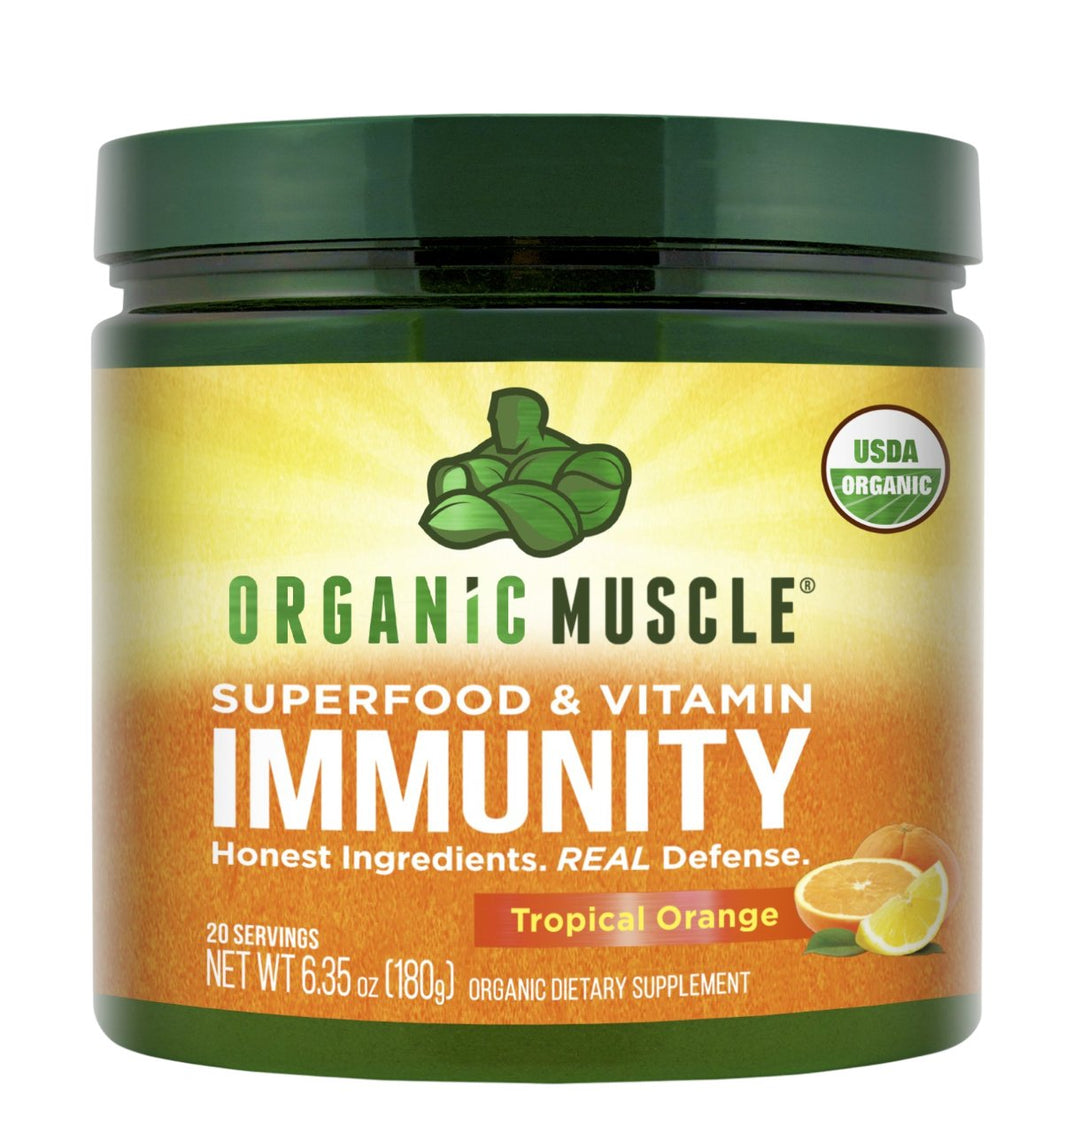 Organic Immunity Shield - Tropical Orange Flavor - Organic Muscle Fitness SupplementsOrganic Muscle Fitness SupplementsOrganic Muscle Fitness Supplements